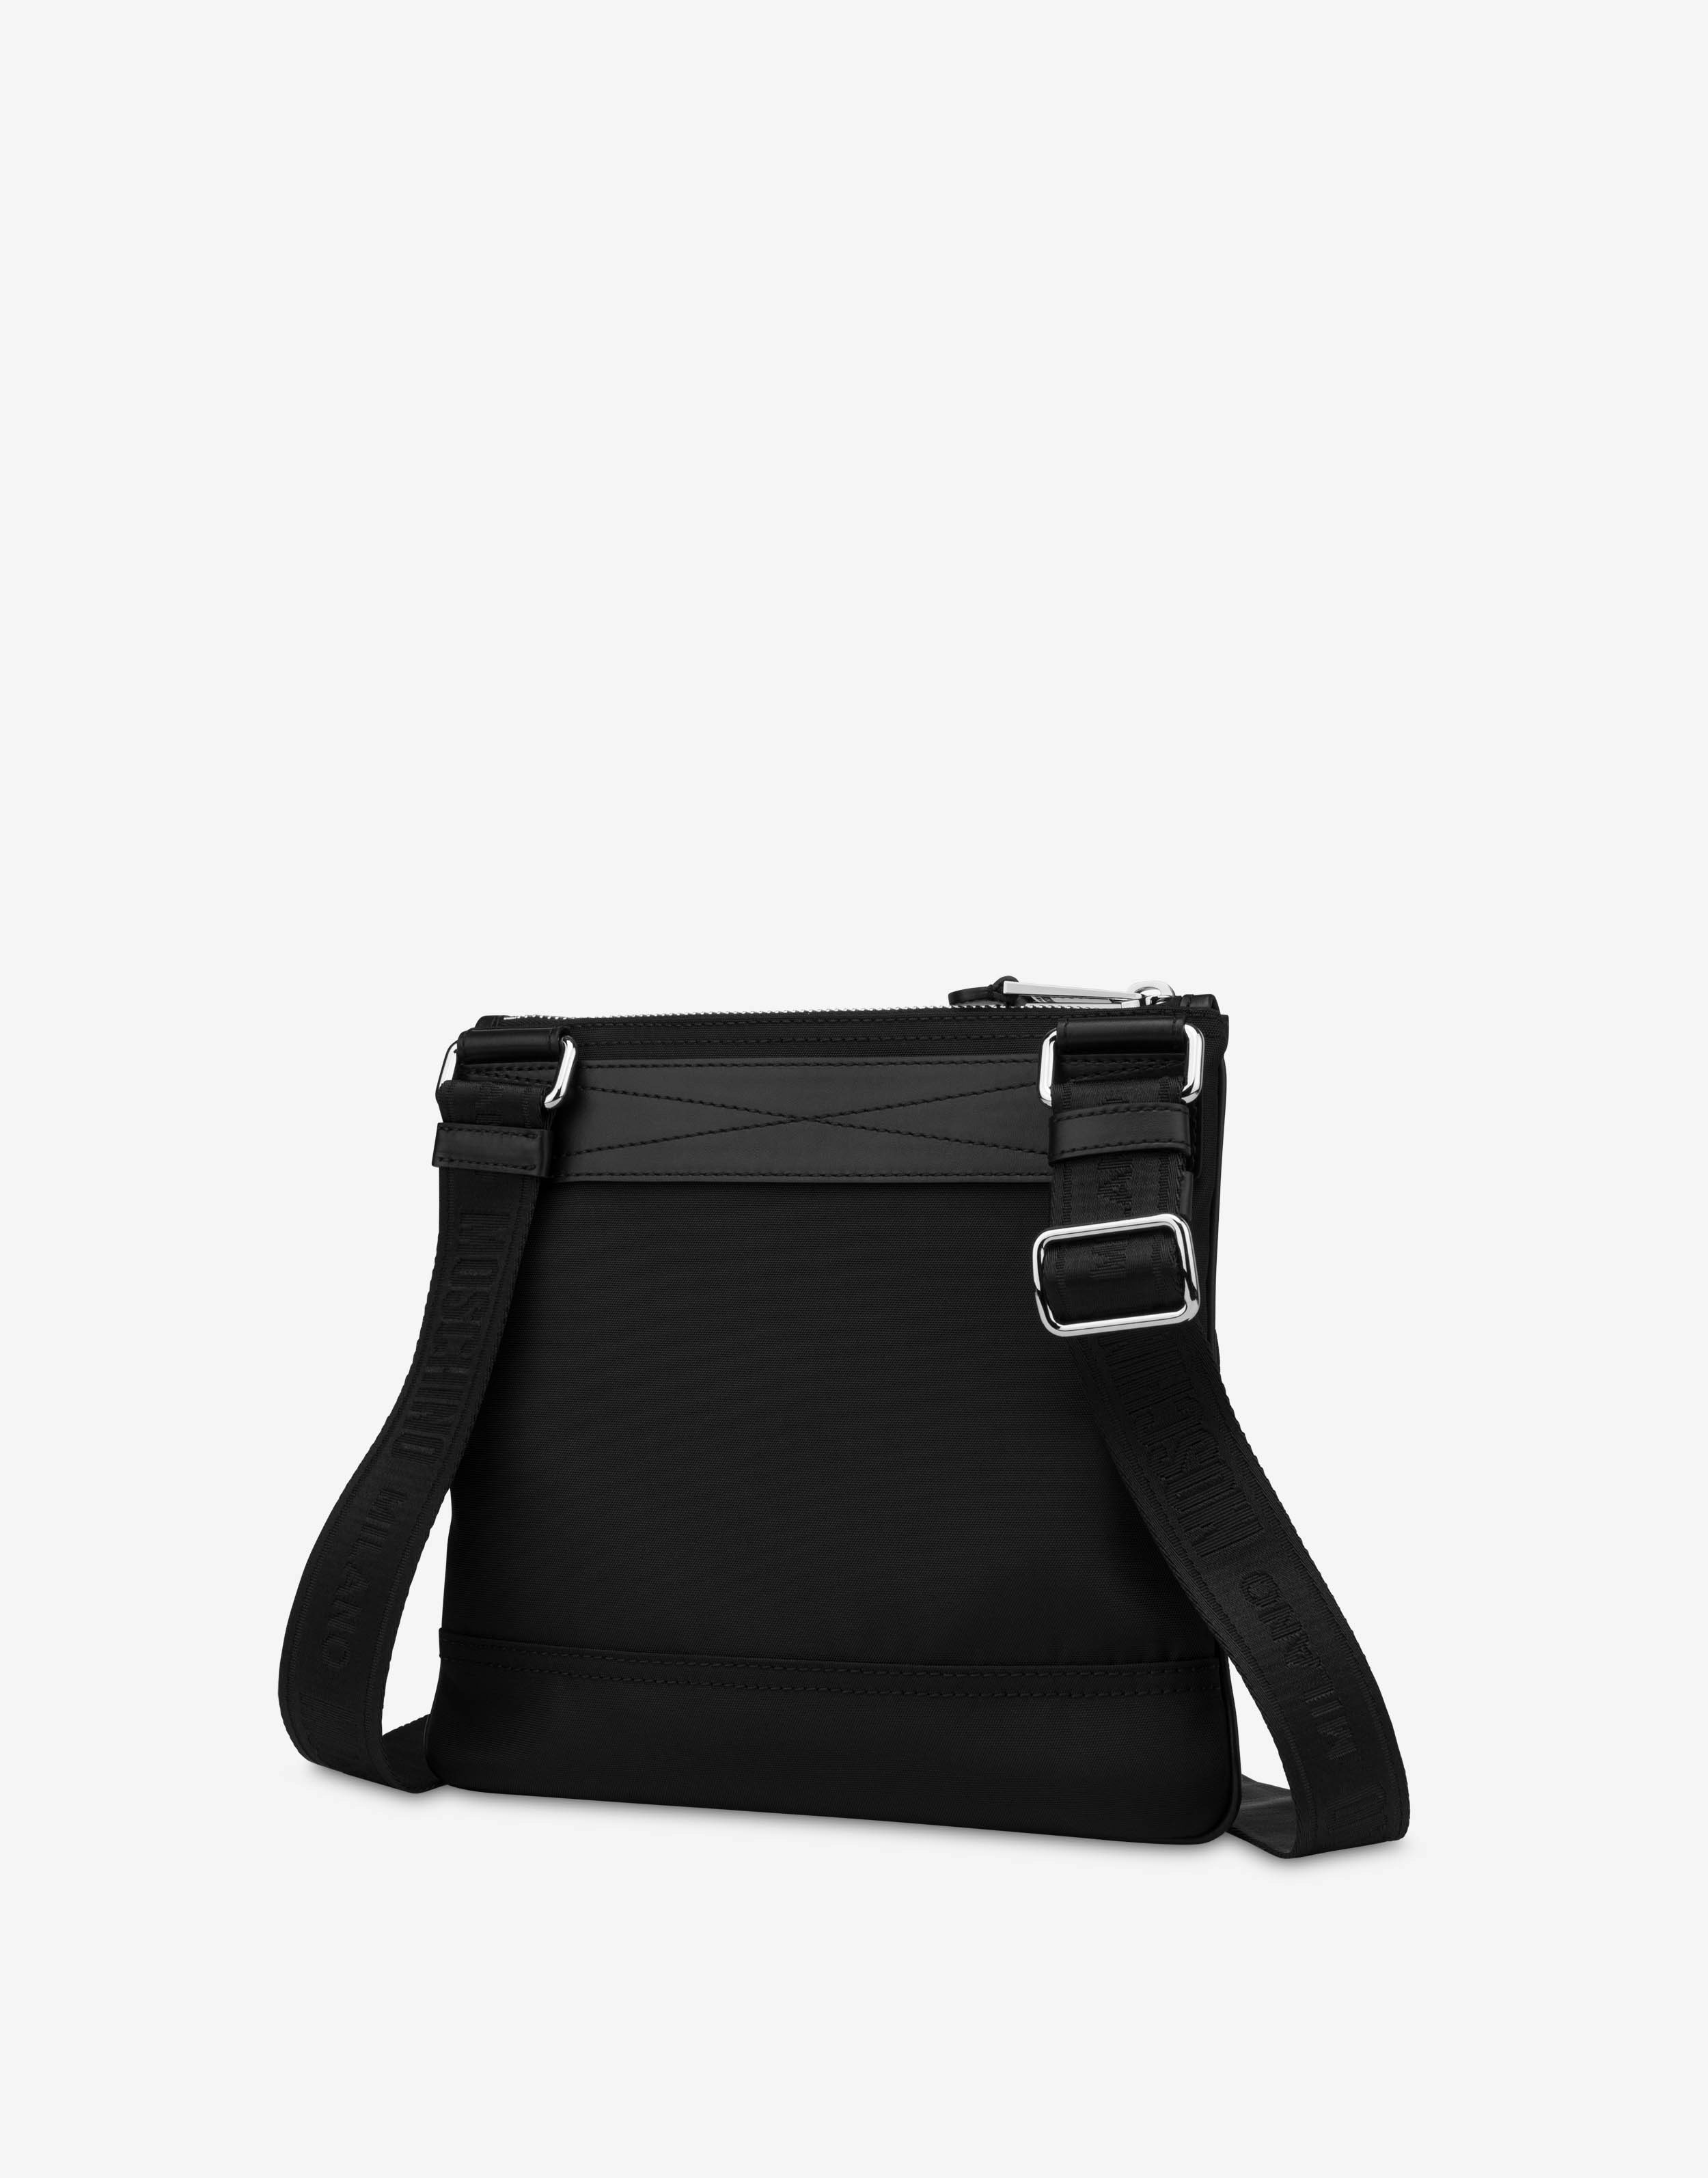 Moschino Couture shoulder bag 0